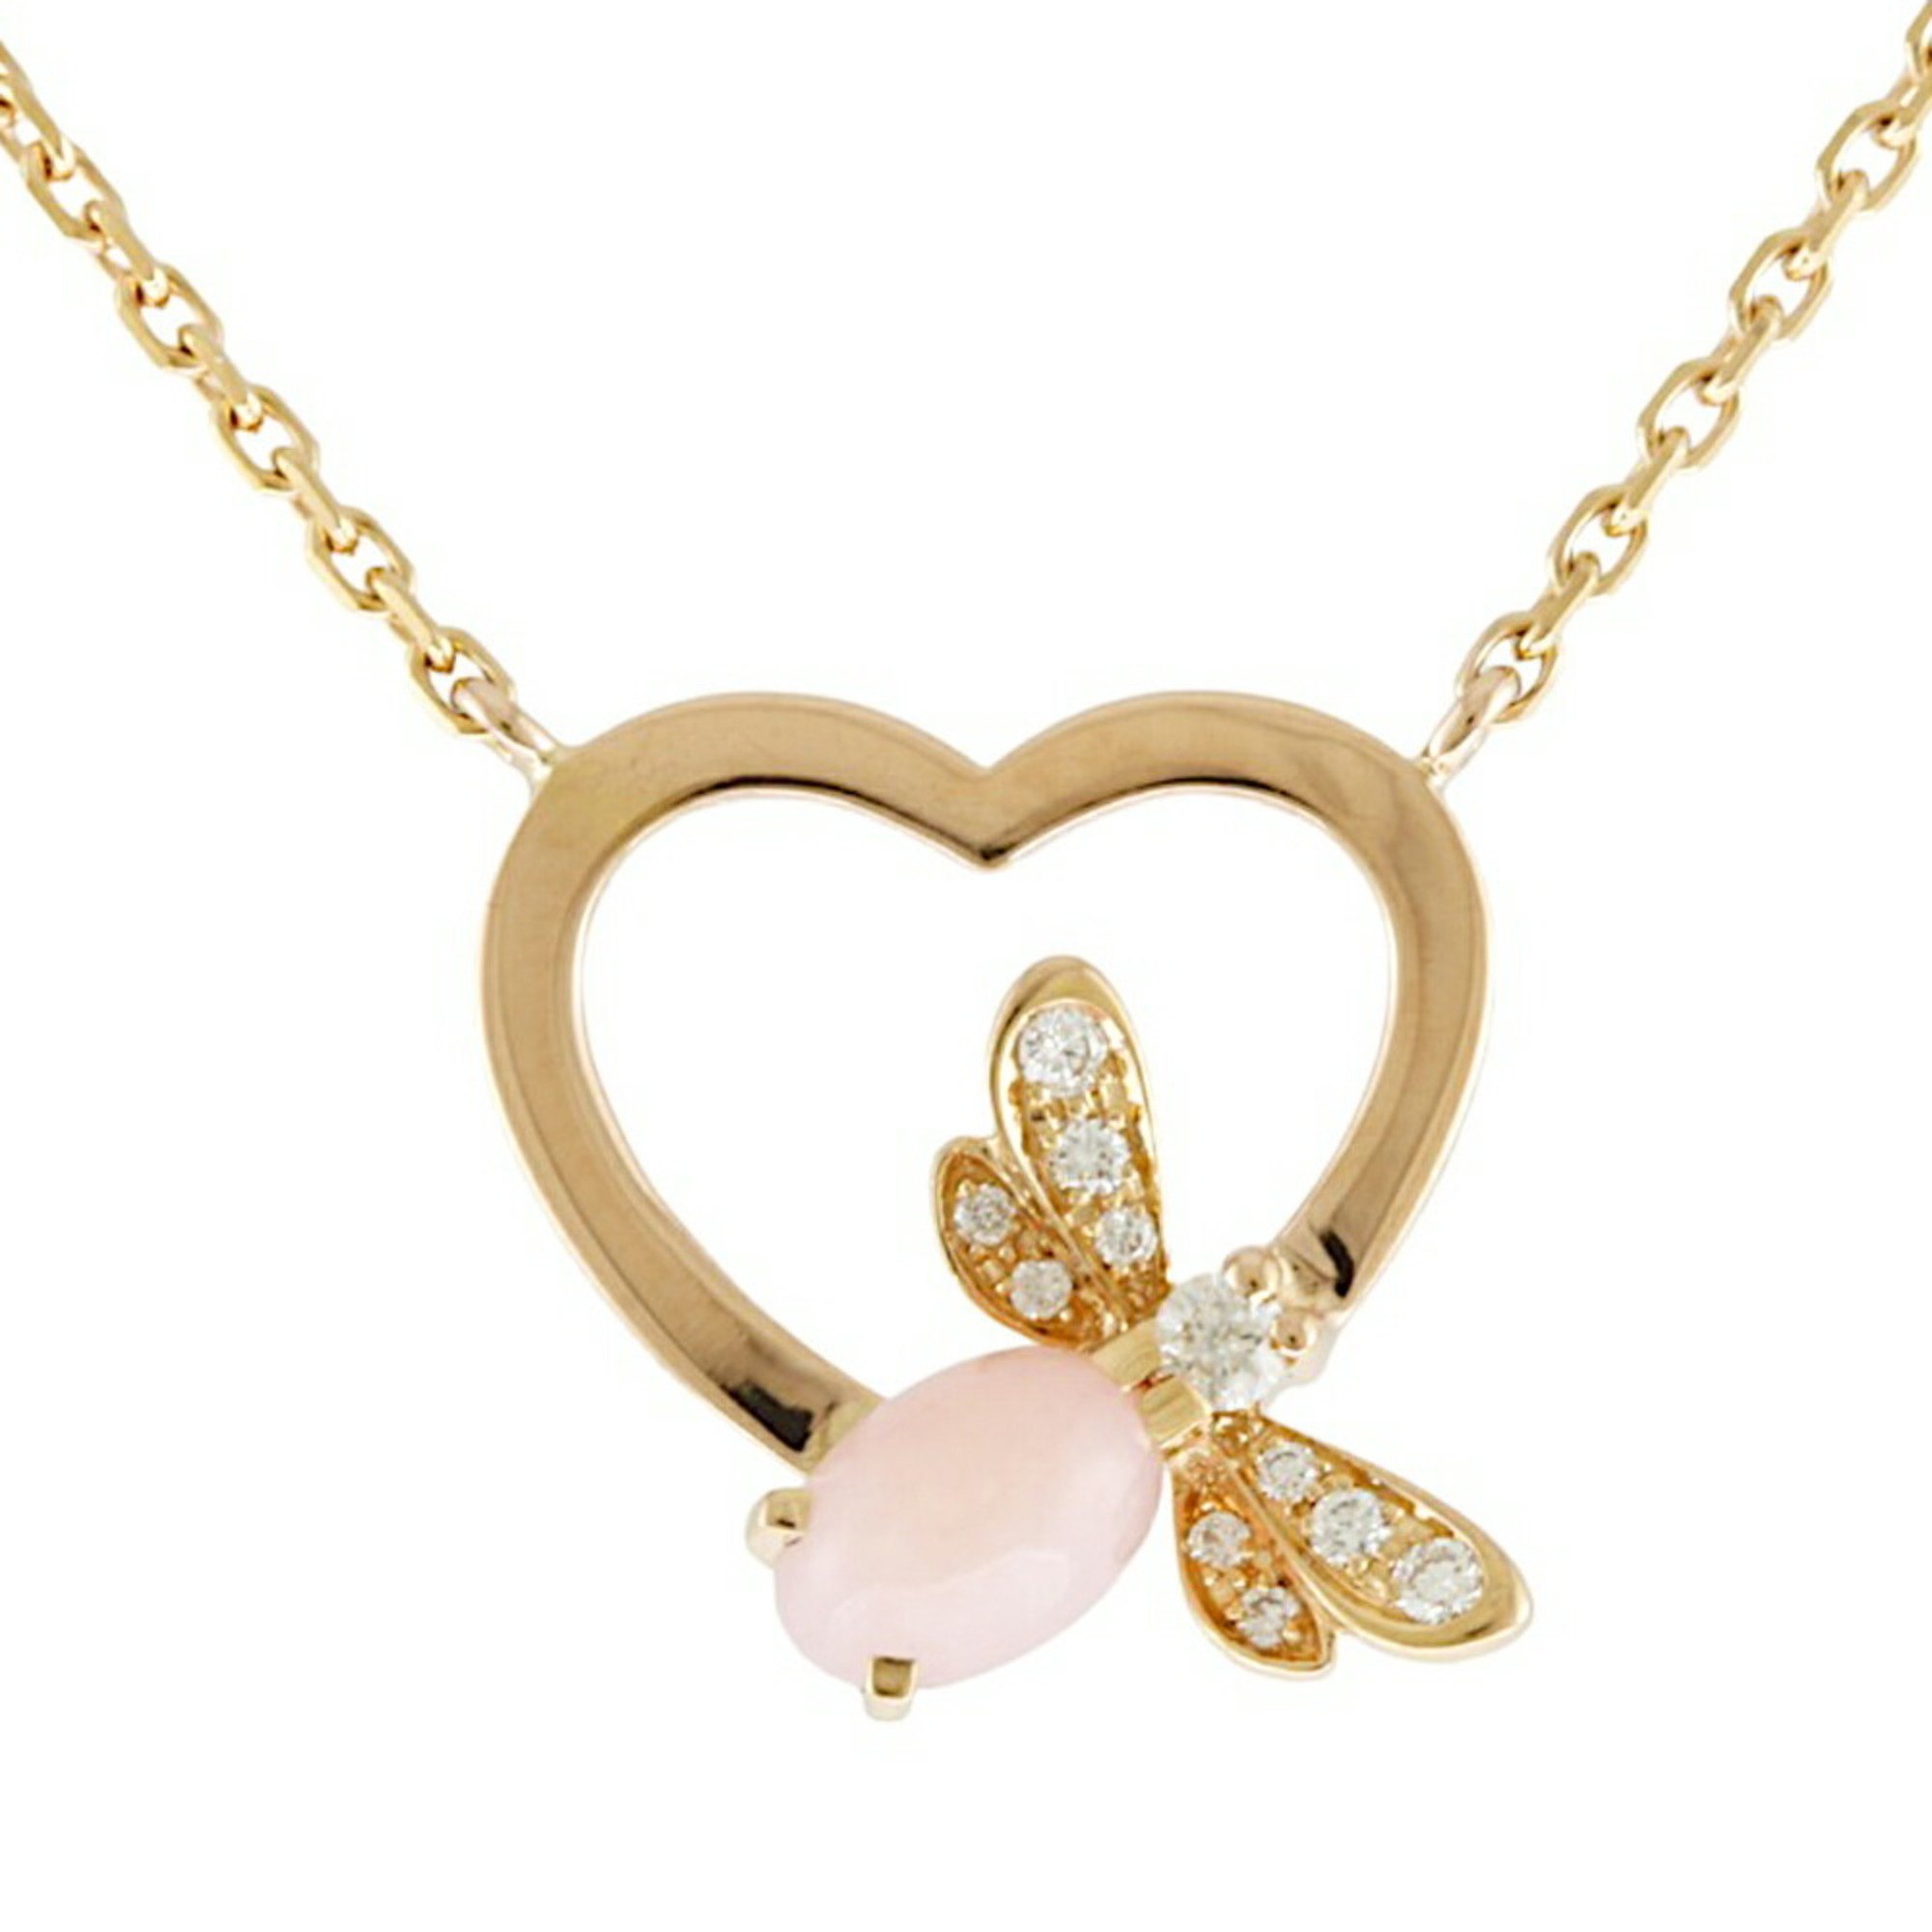 Chaumet Attrape More Necklace 18K Pink Opal Diamond Women's